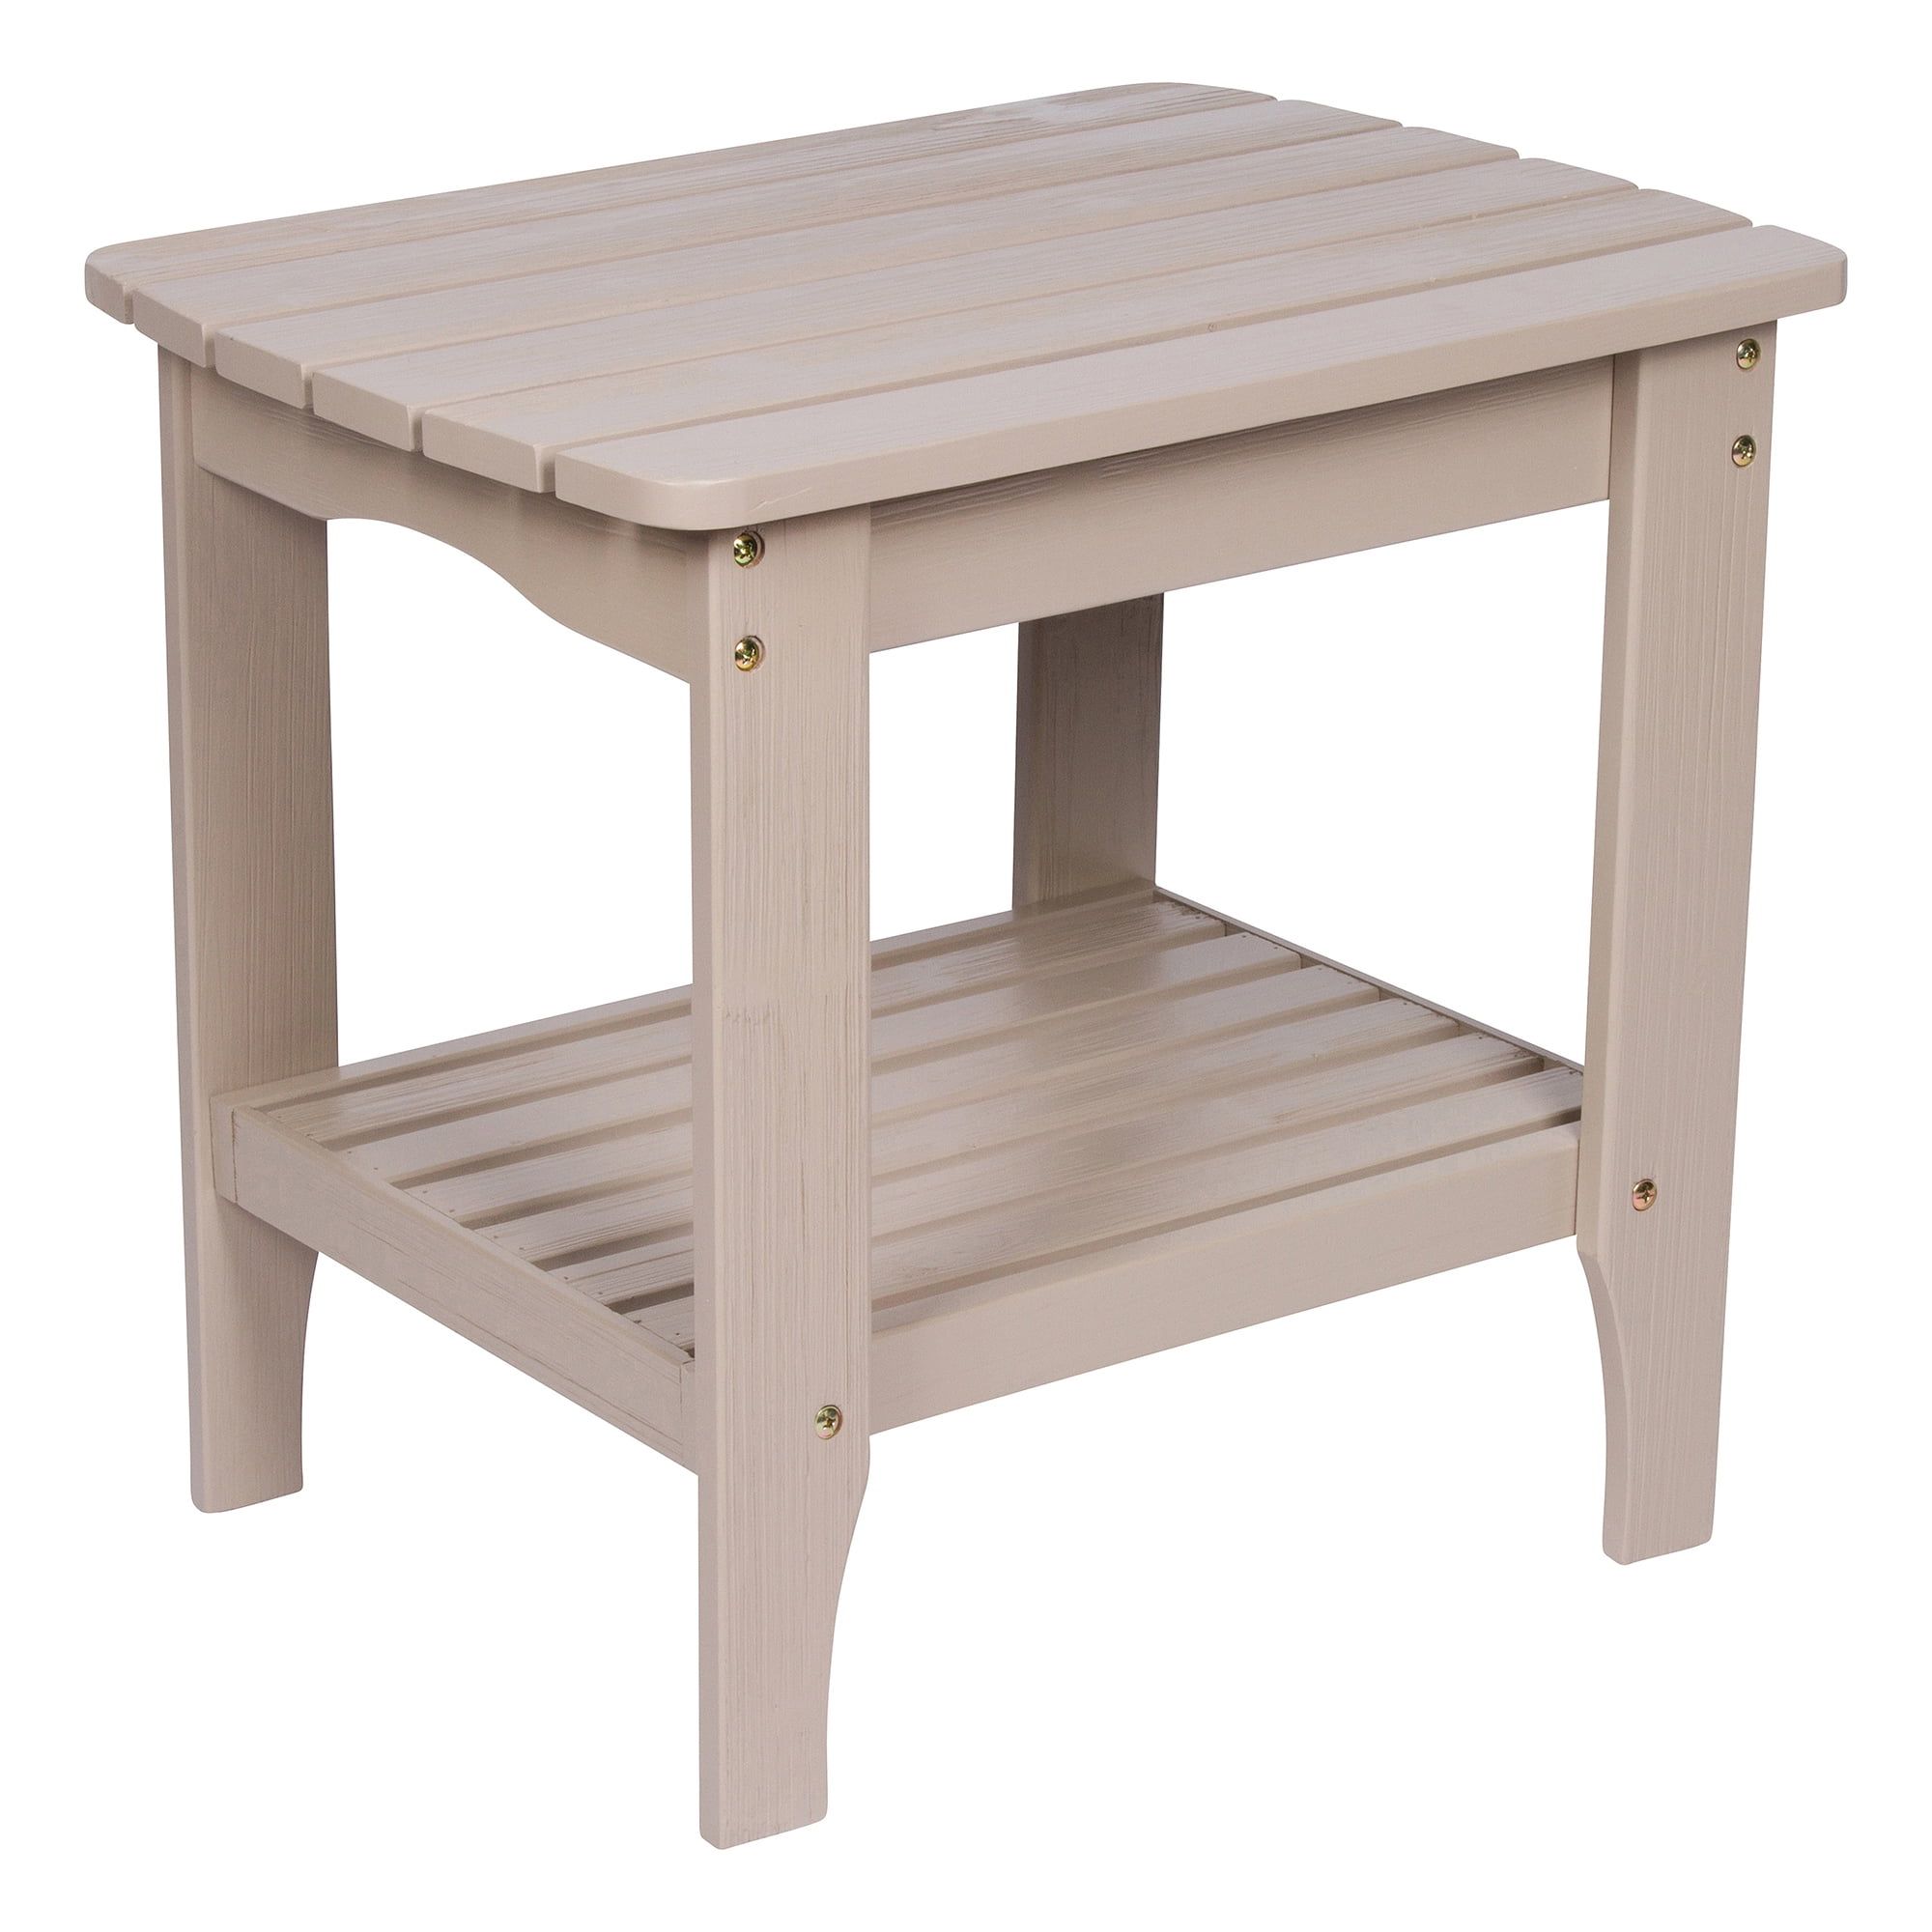 Cedarwood Rectangular Side Table with Stone Finish, 24"x22"